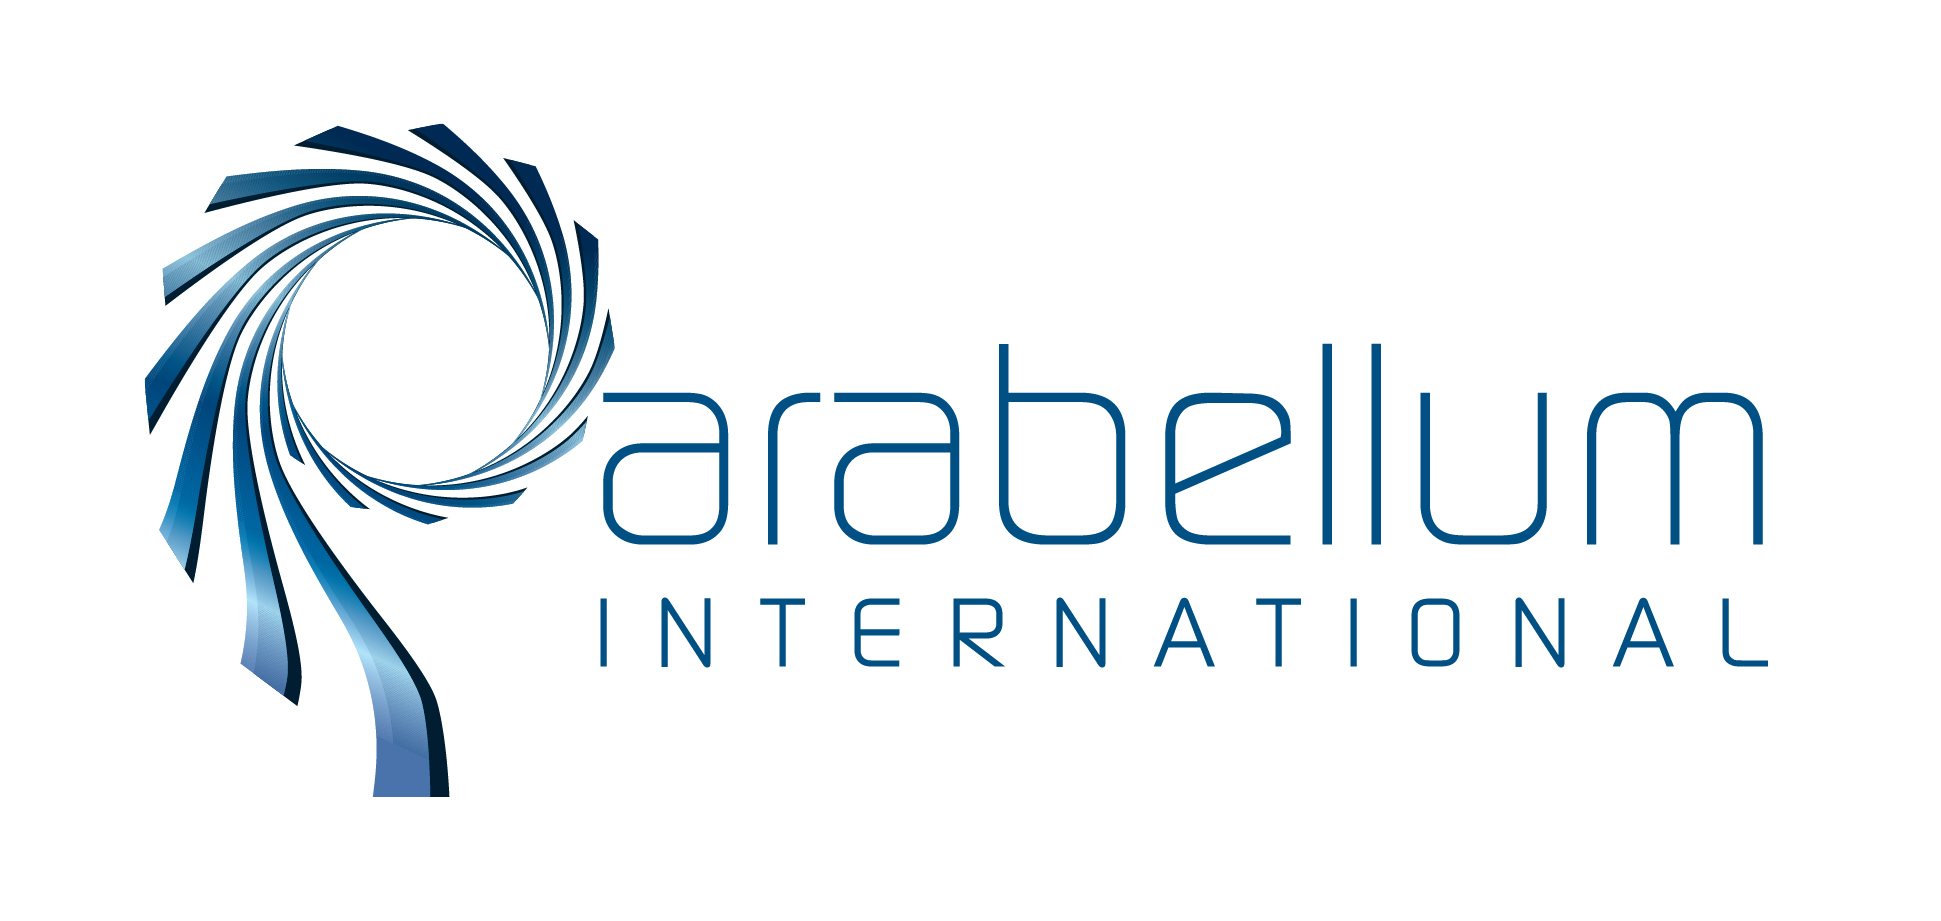 Parabellum_International_logo